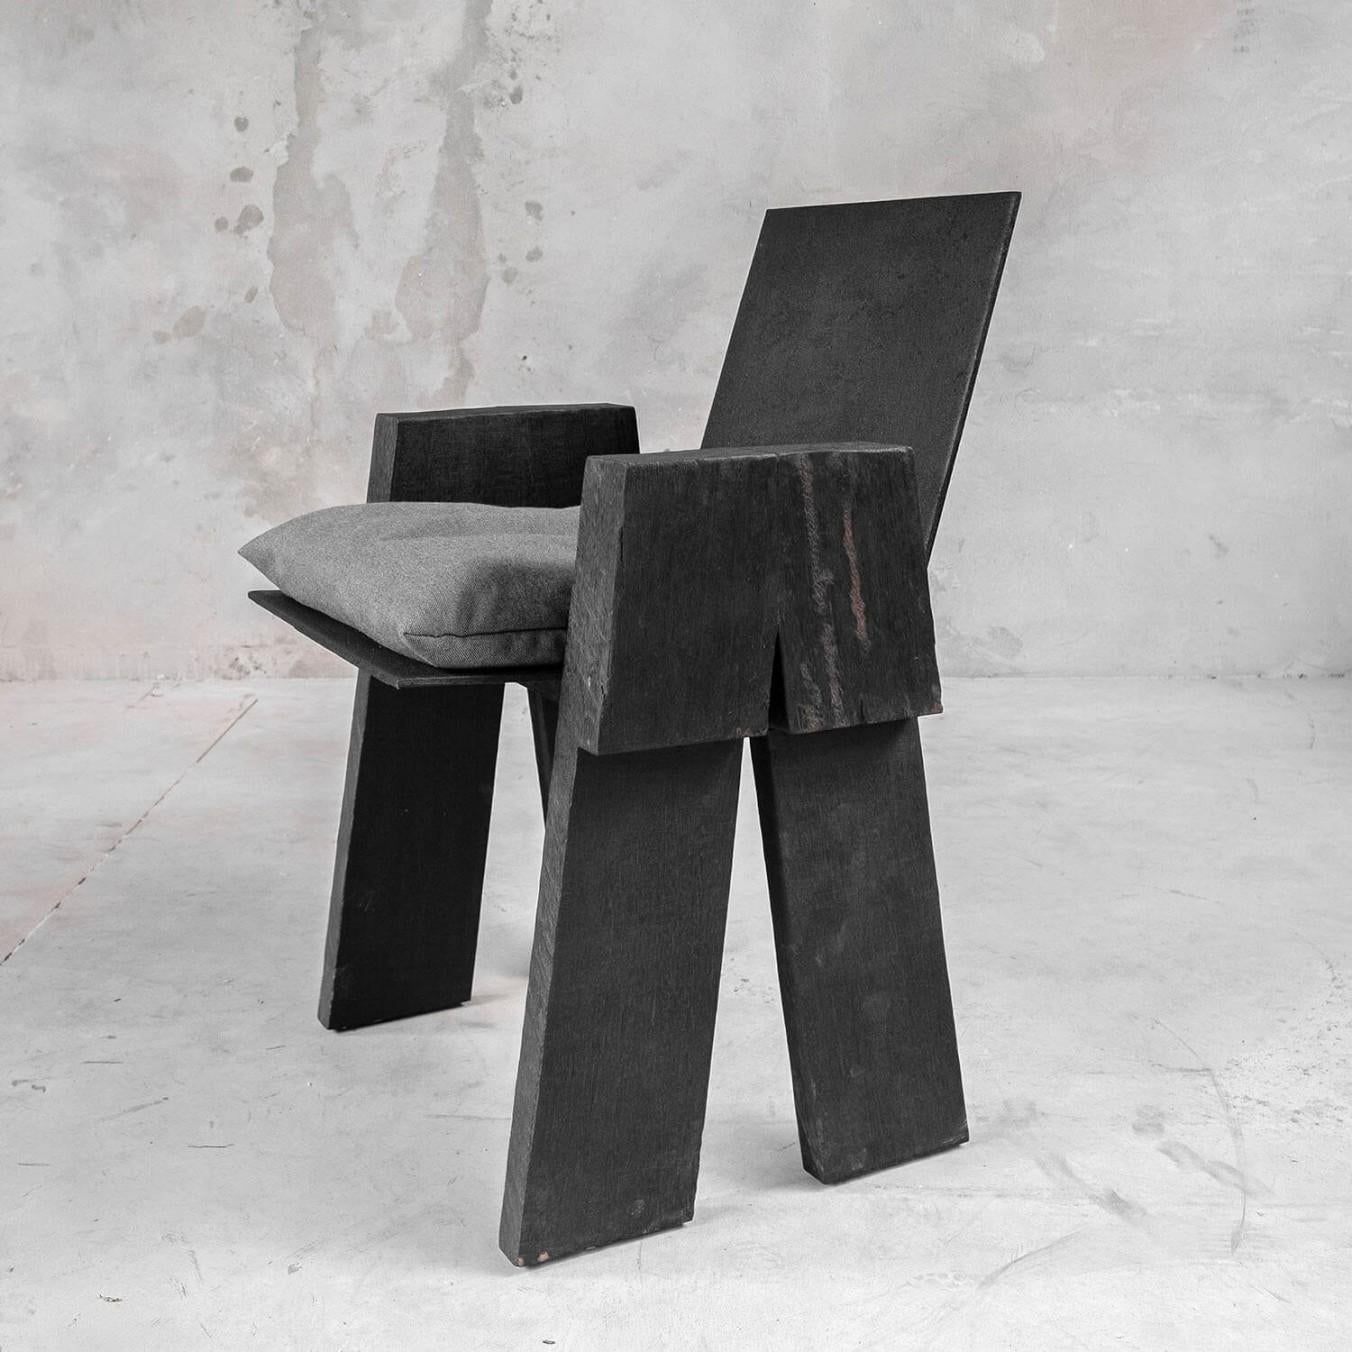 Modern AD Sculpted Chair, Sculpted Iroko Wood, Arno Declercq